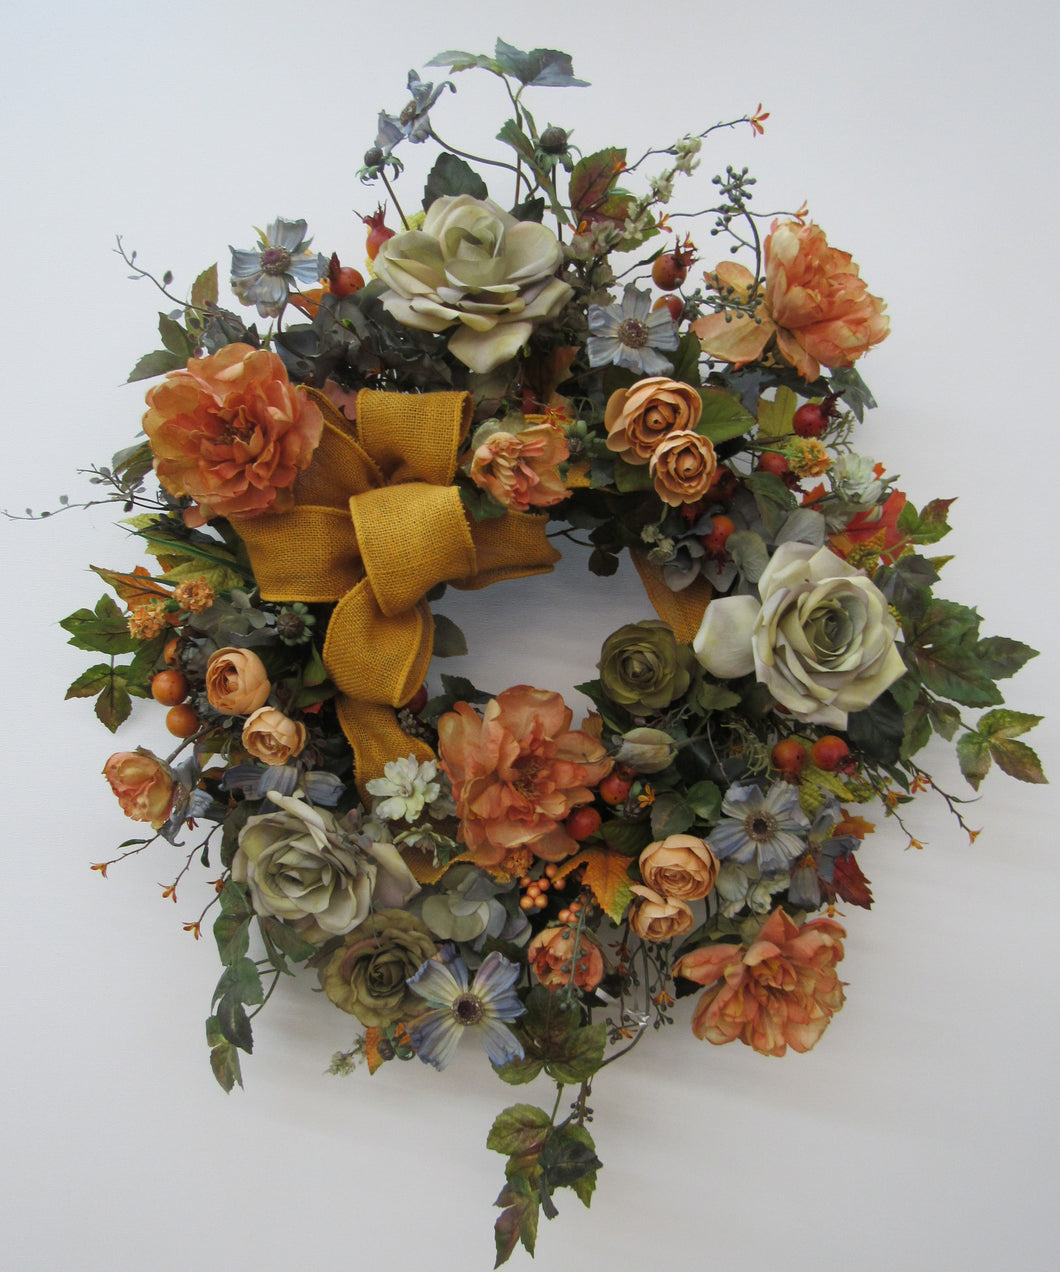 Gallery/Harv67 - April's Garden Wreath